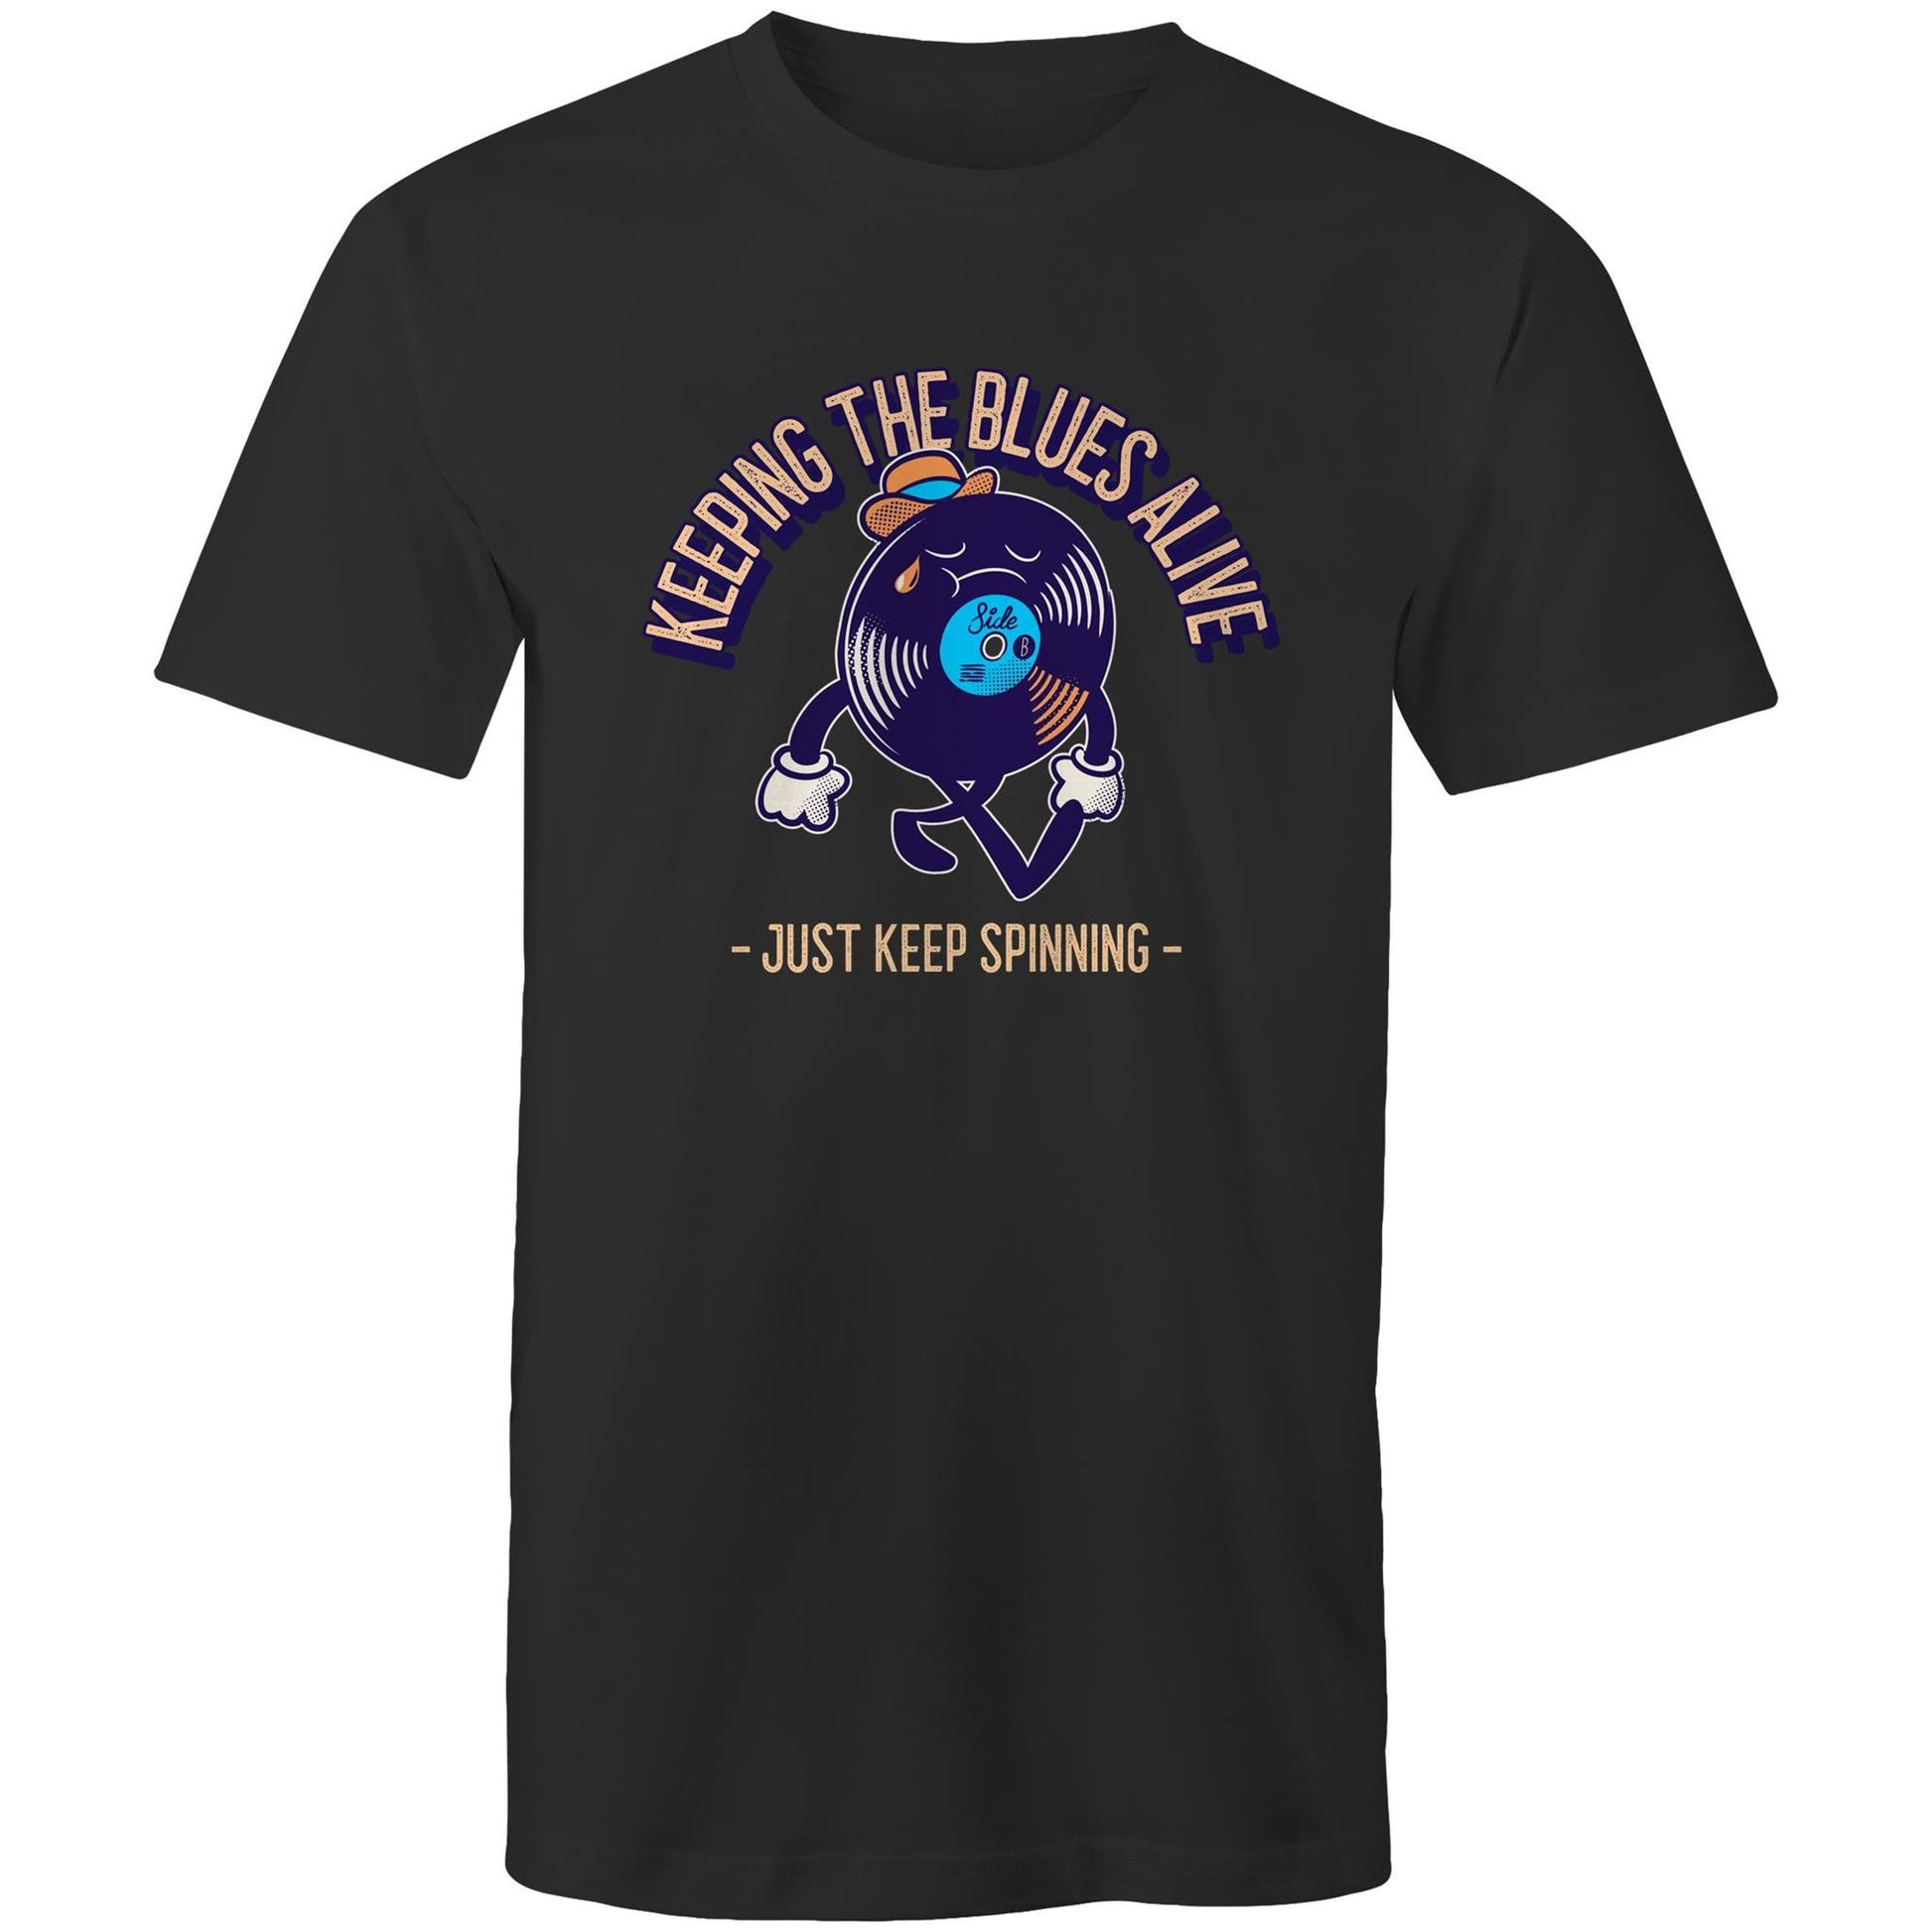 Keeping The Blues Alive - Mens T-Shirt Black Mens T-shirt Music